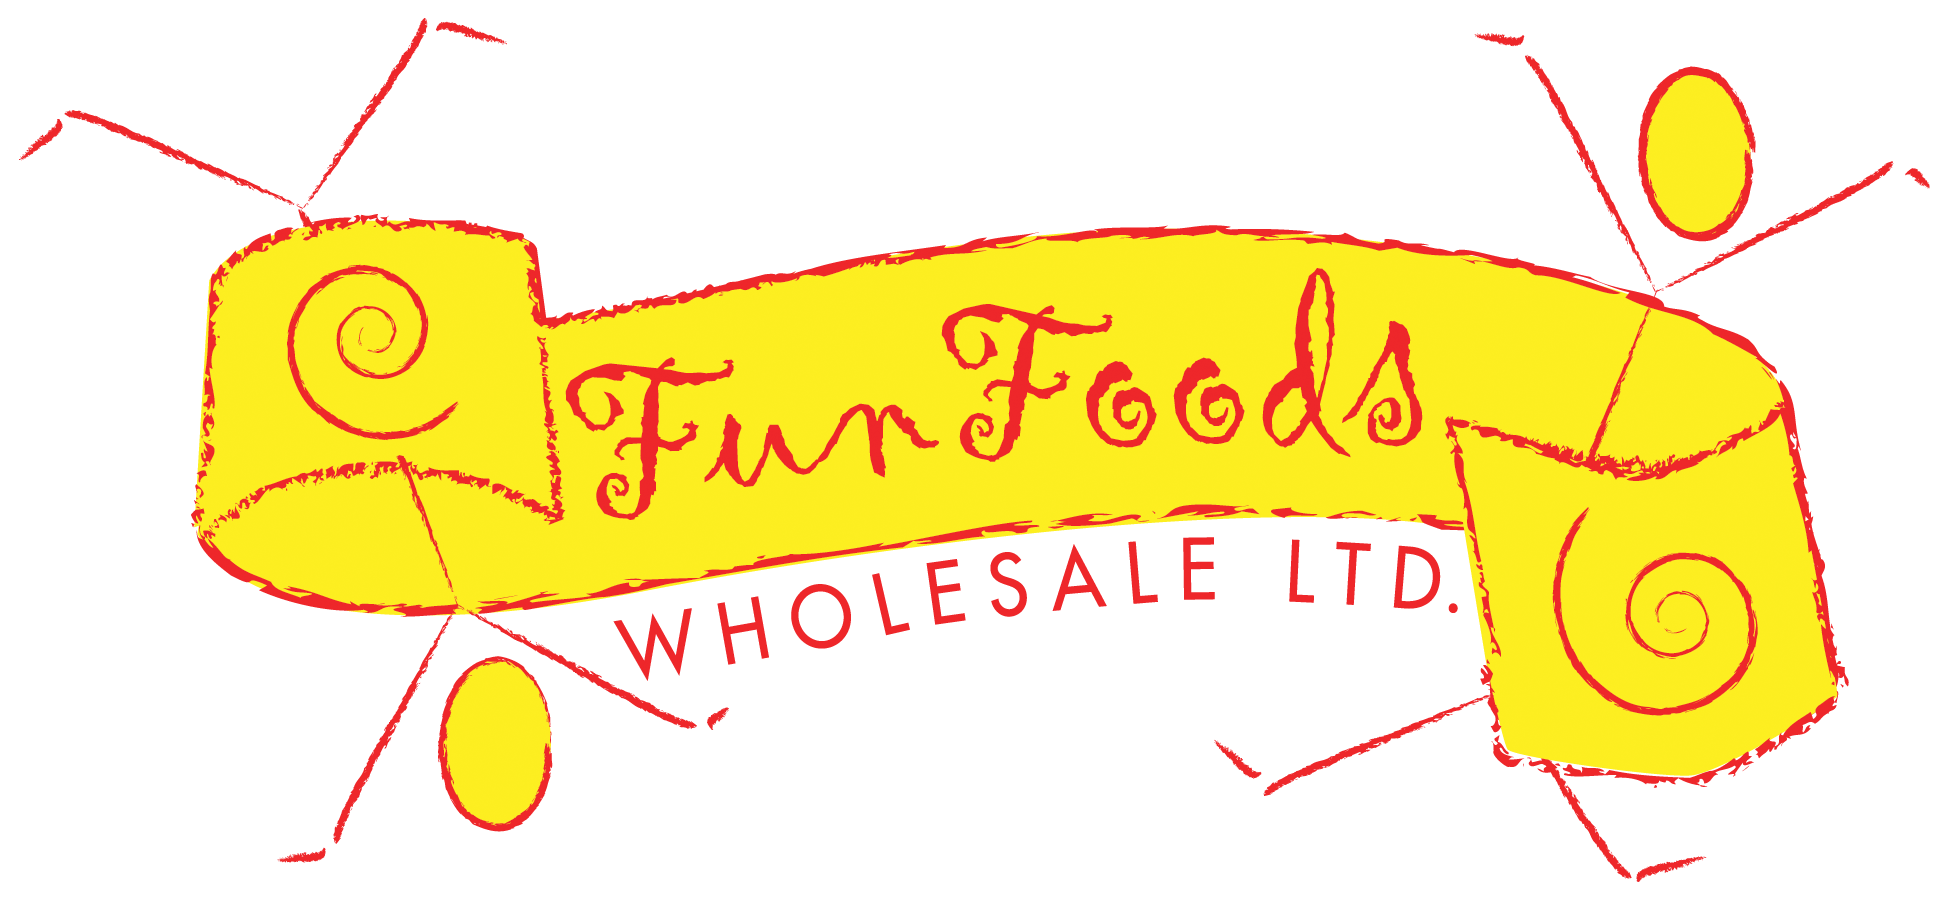 Fun Foods Wholesale Ltd